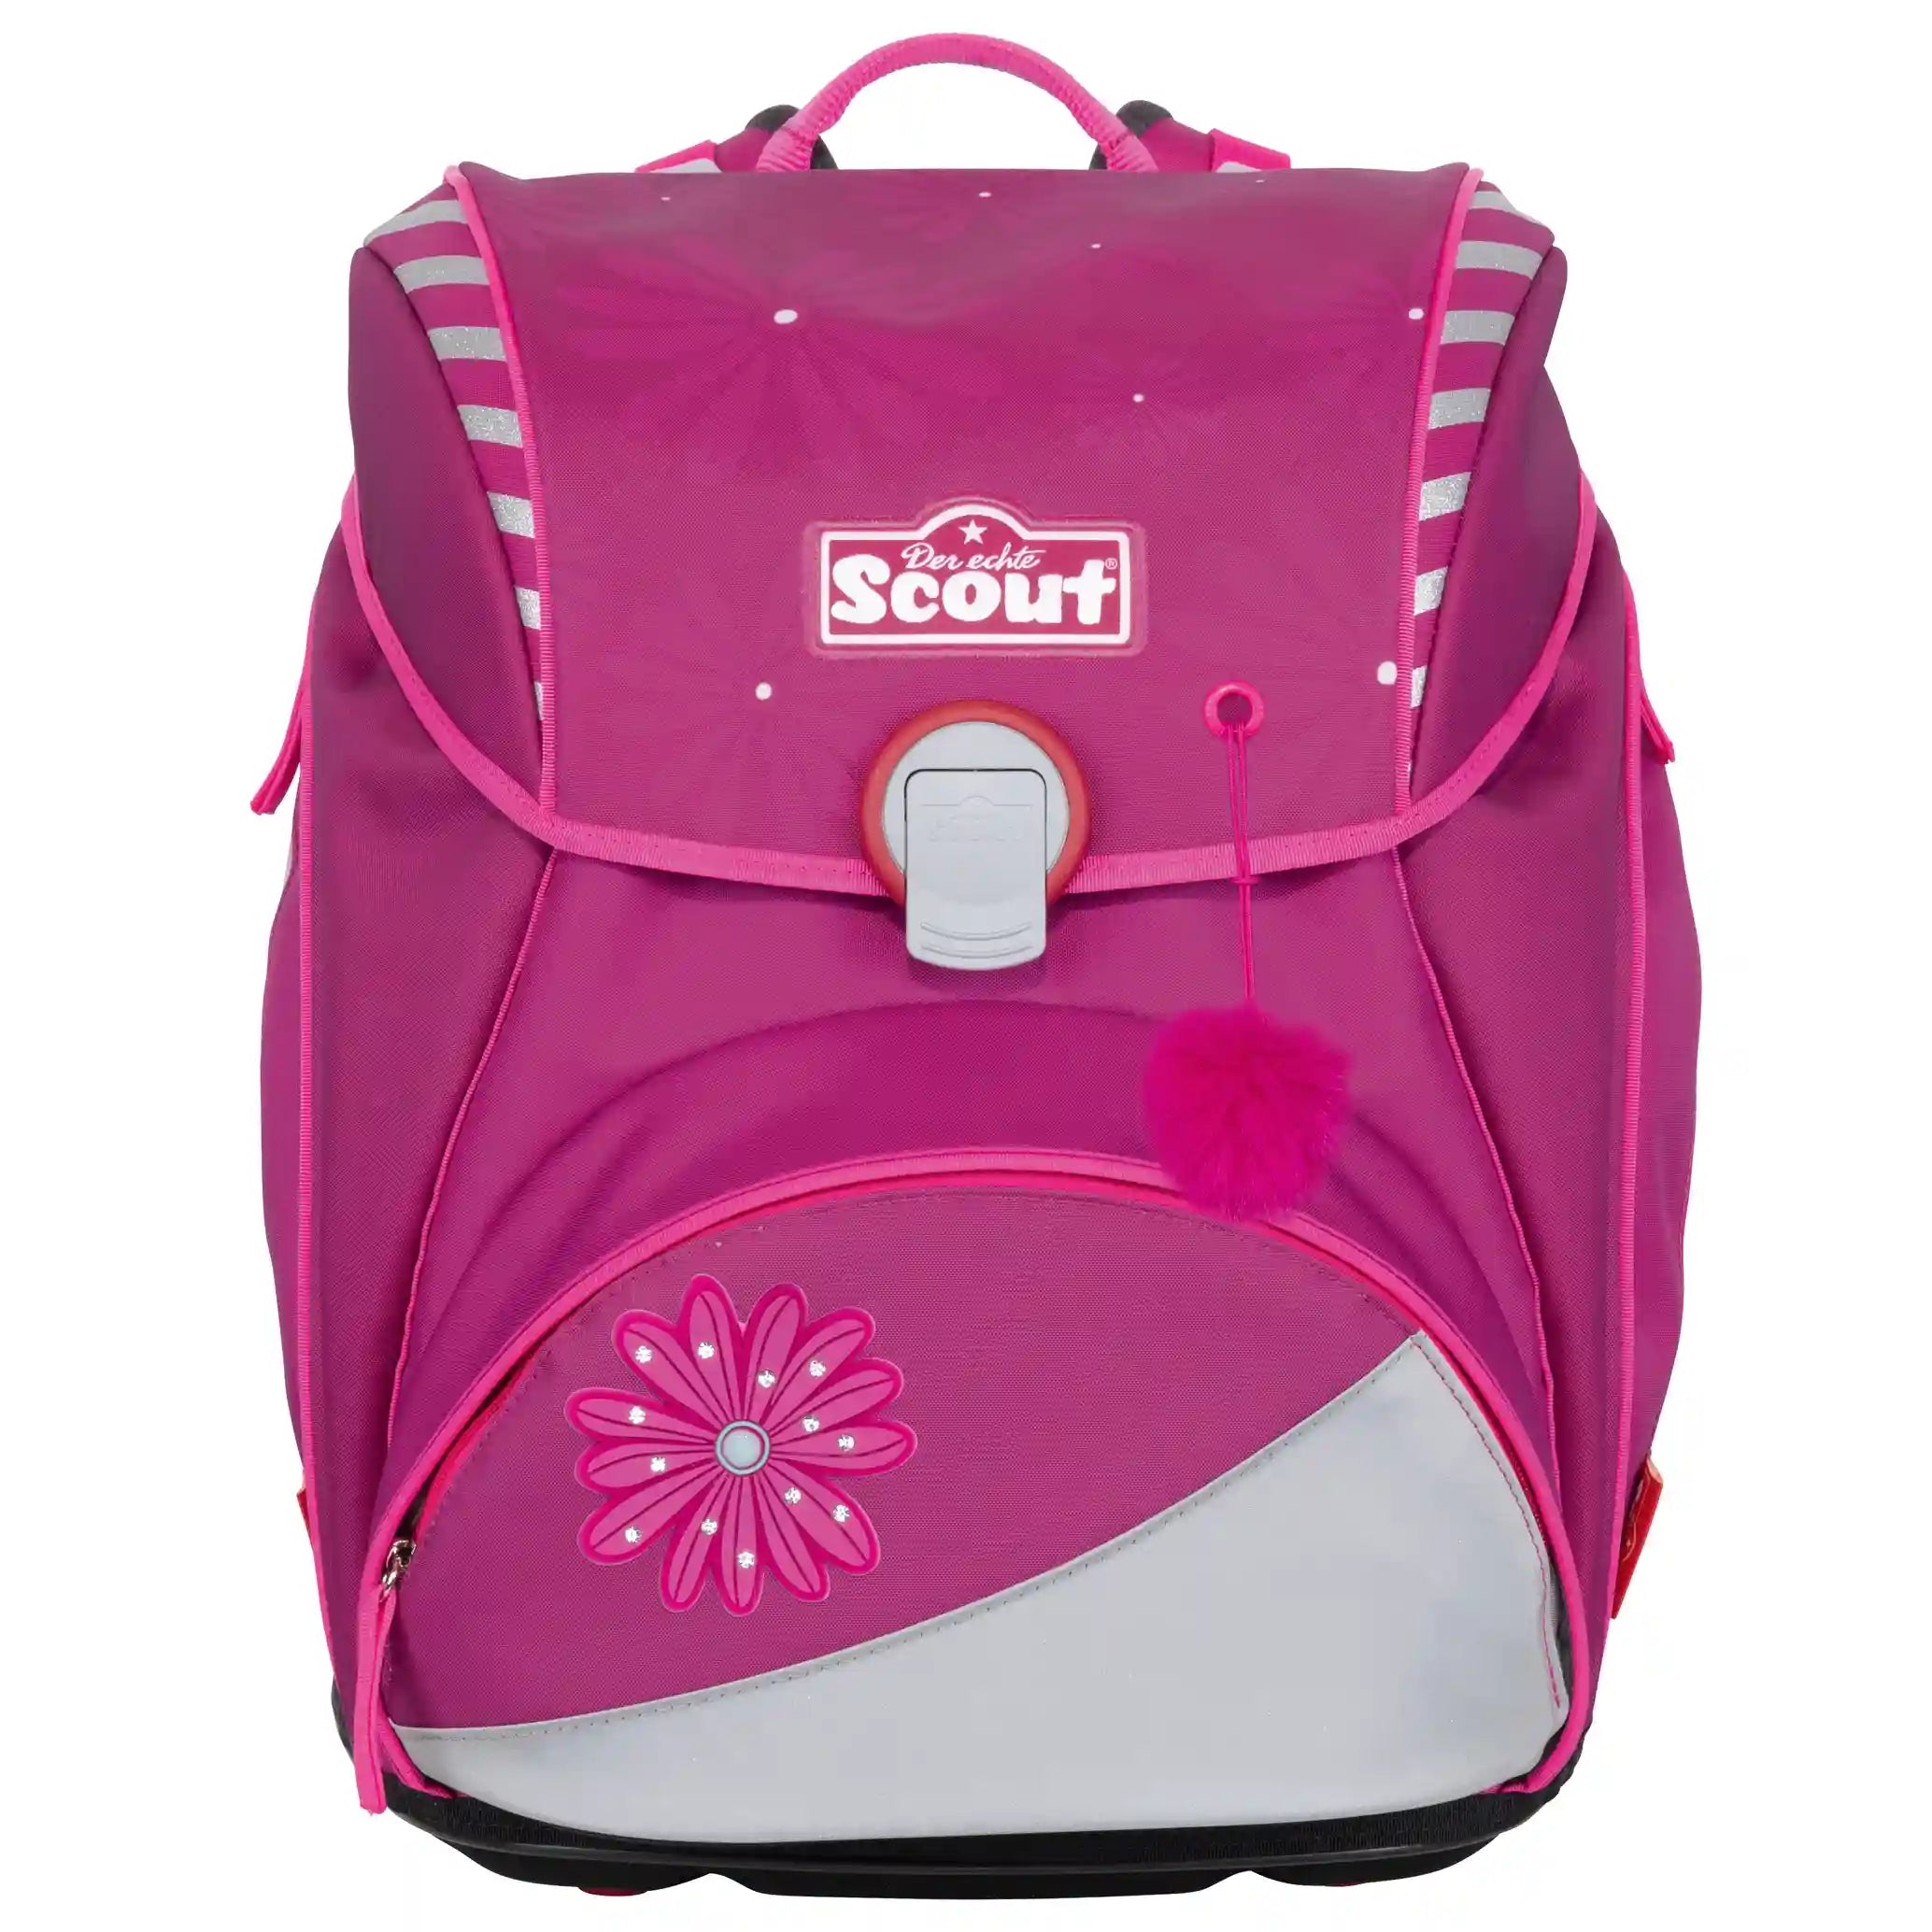 Scout Alpha Limited Edition 4-piece satchel set - snaps-pretty pink